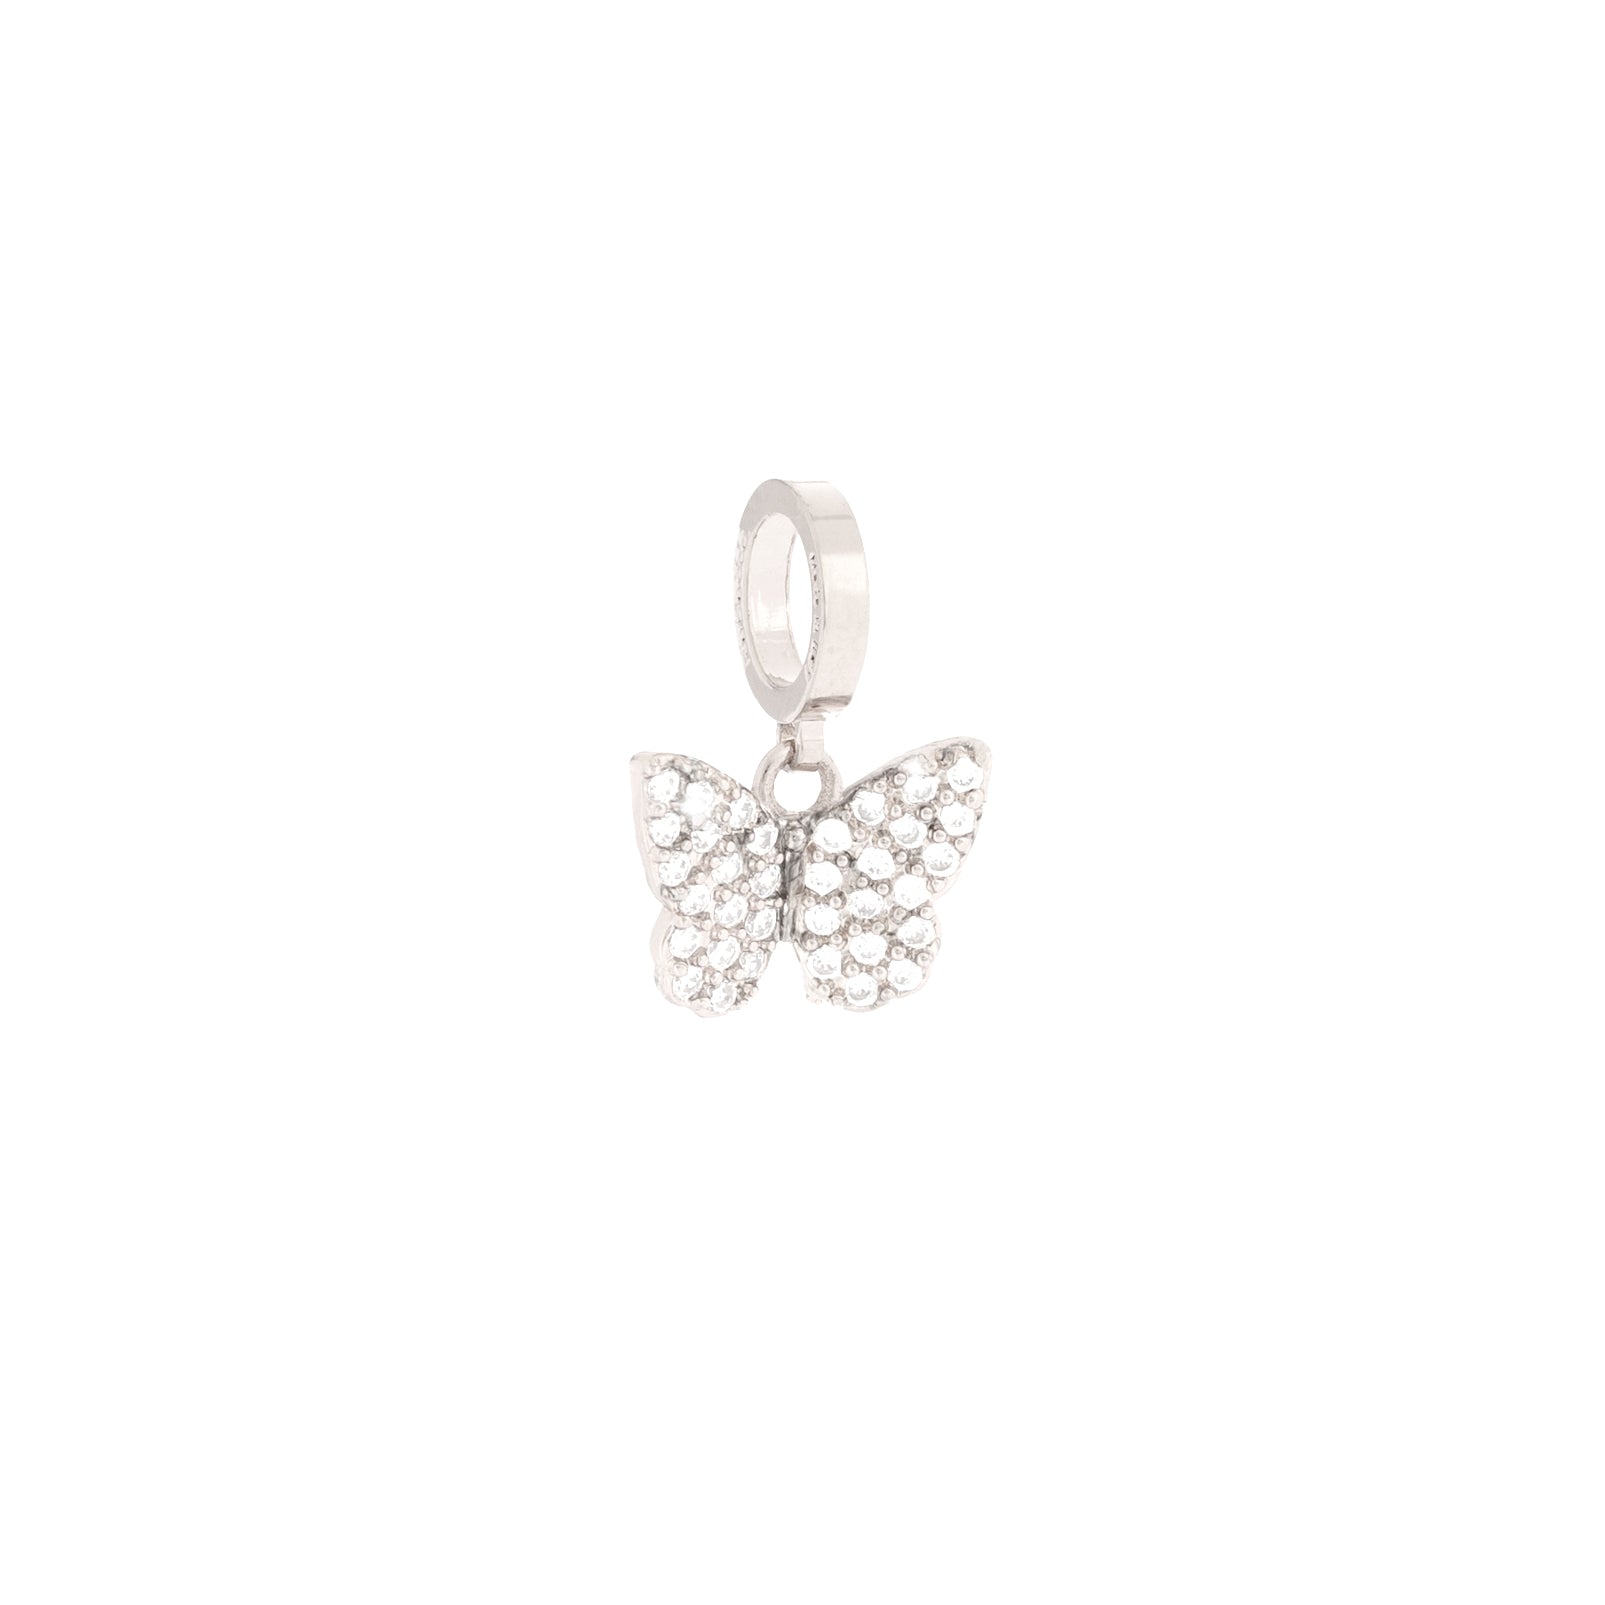 REBECCA MyWorld Pearl & Butterfly Charm Bracelet - John Ross Jewellers